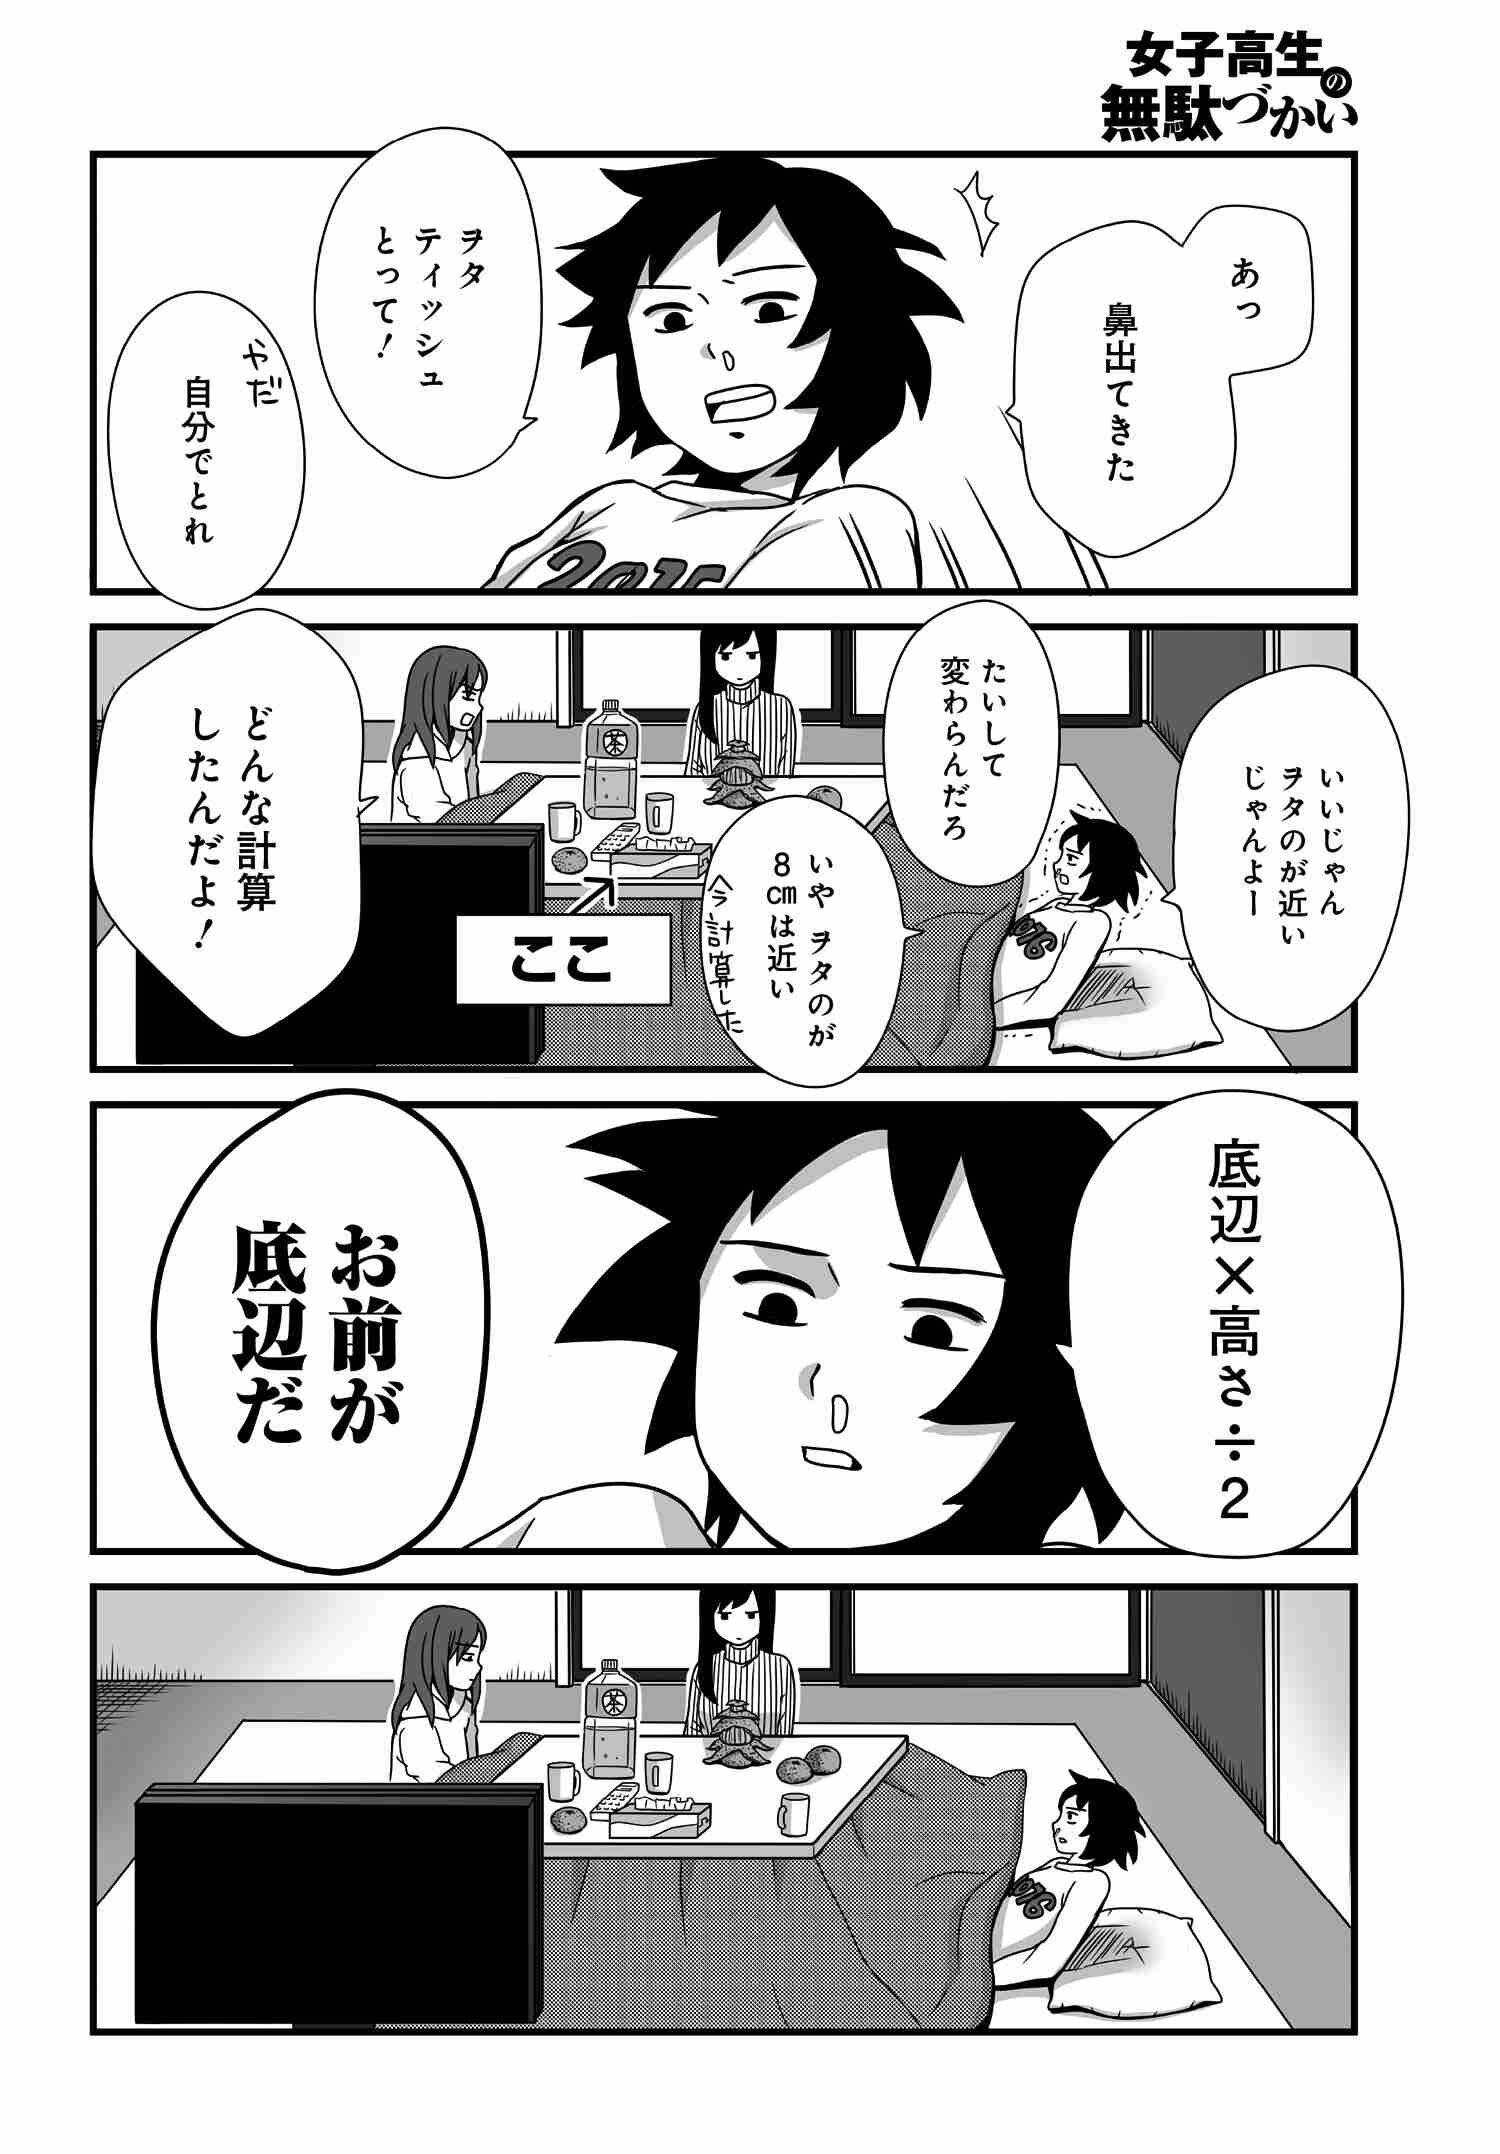 Joshikousei no Mudazukai - Chapter 006 - Page 4